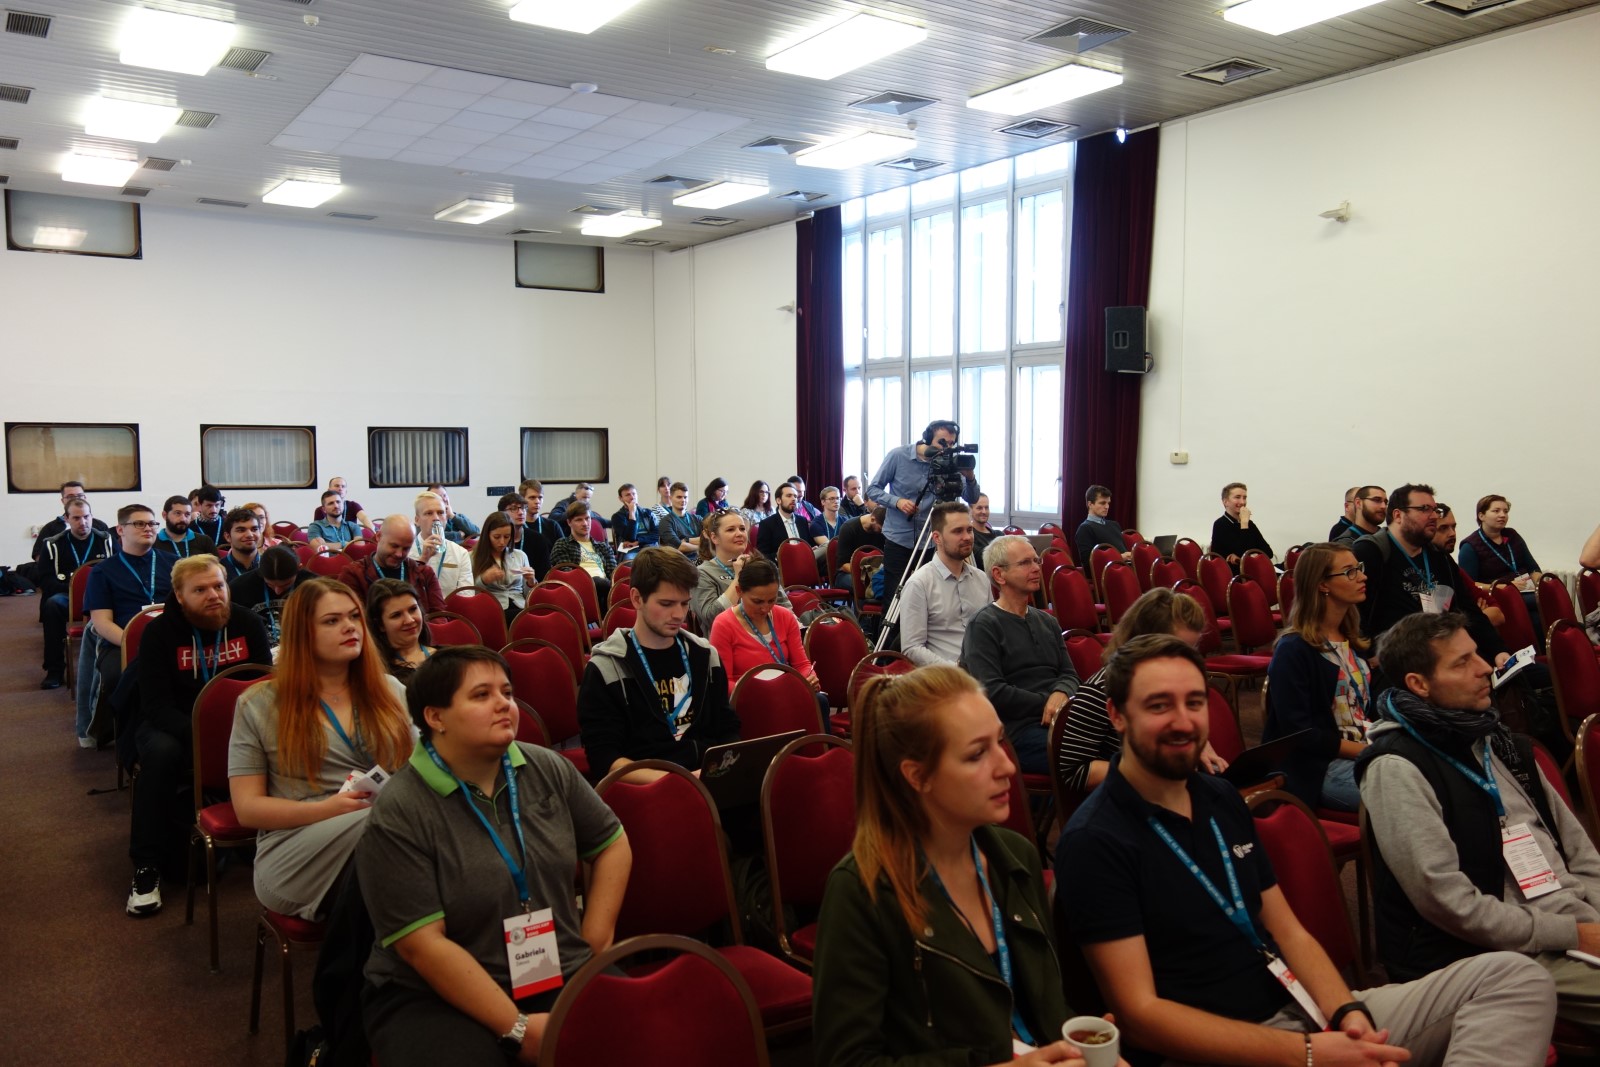 WordCamp Brno